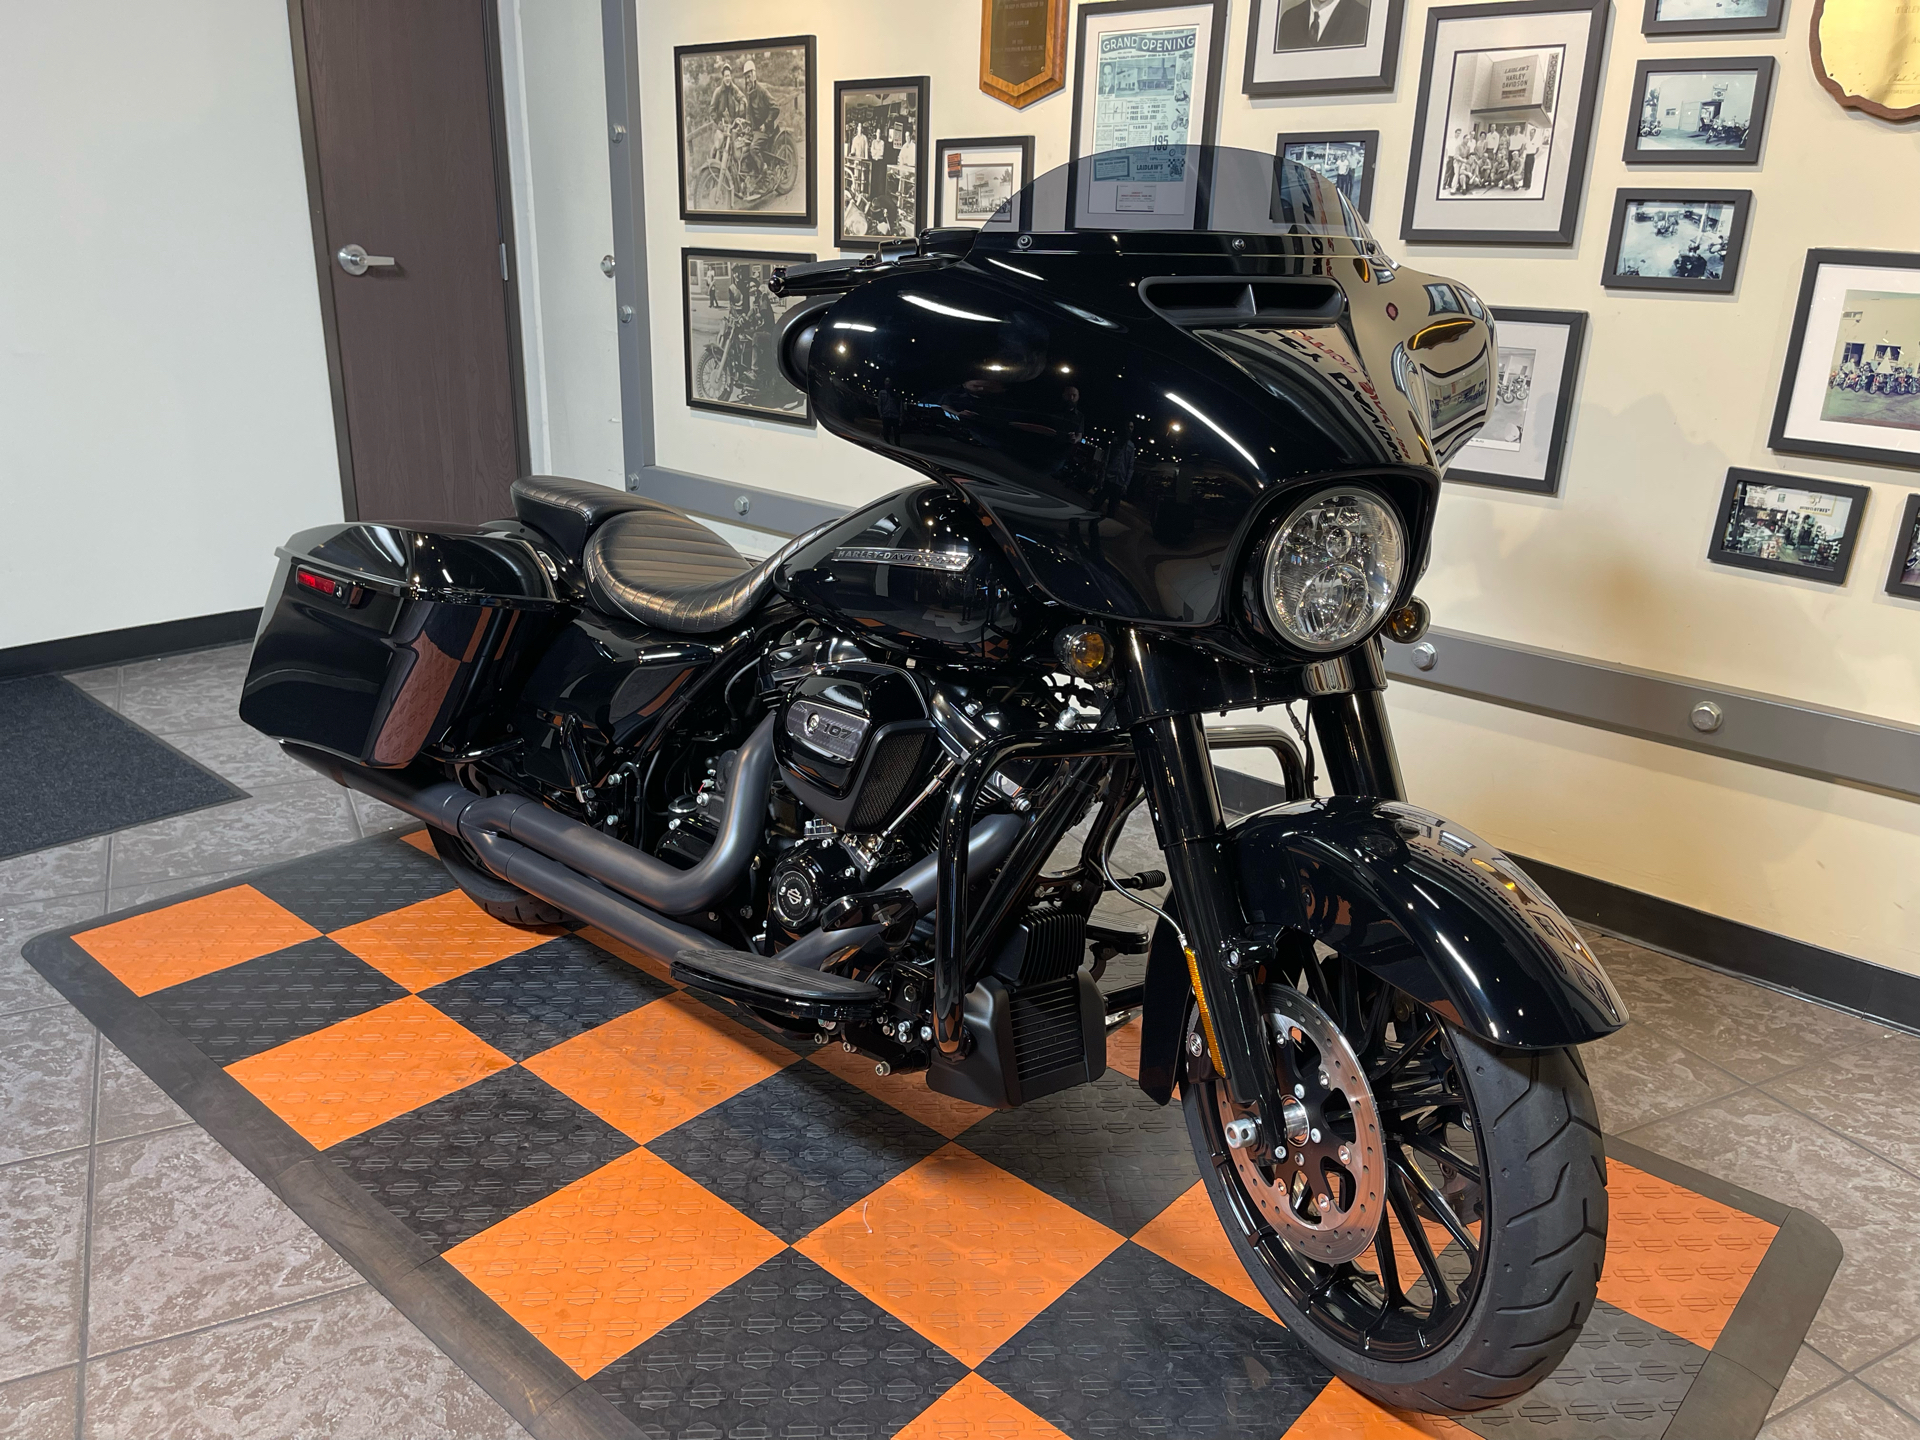 2018 Harley-Davidson Street Glide® Special in Baldwin Park, California - Photo 8